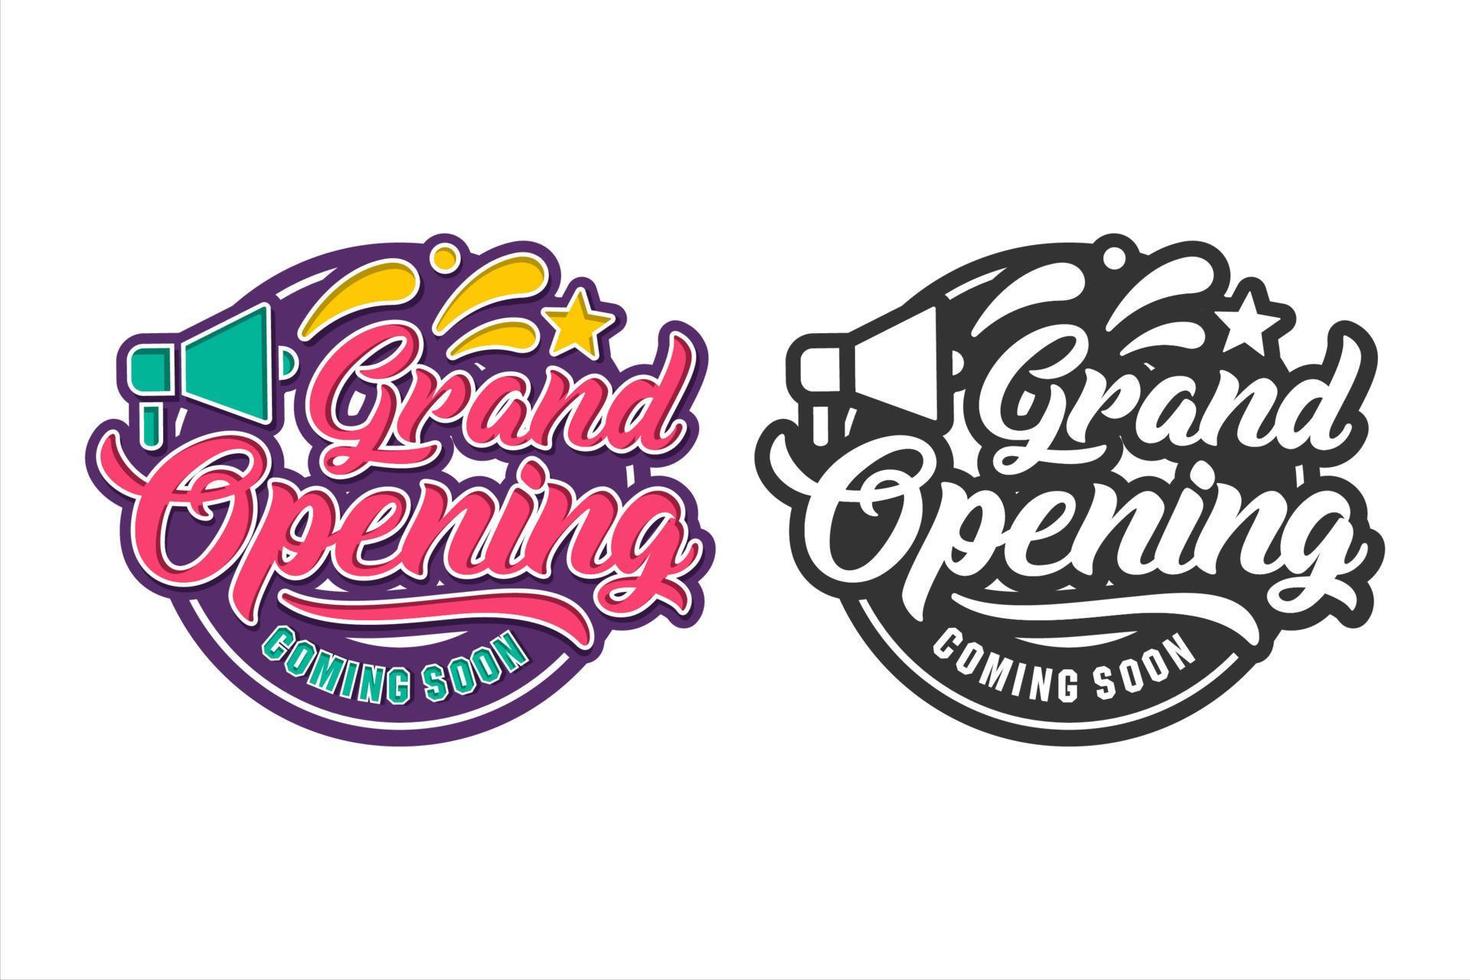 Grand opening coming soon design logo vector